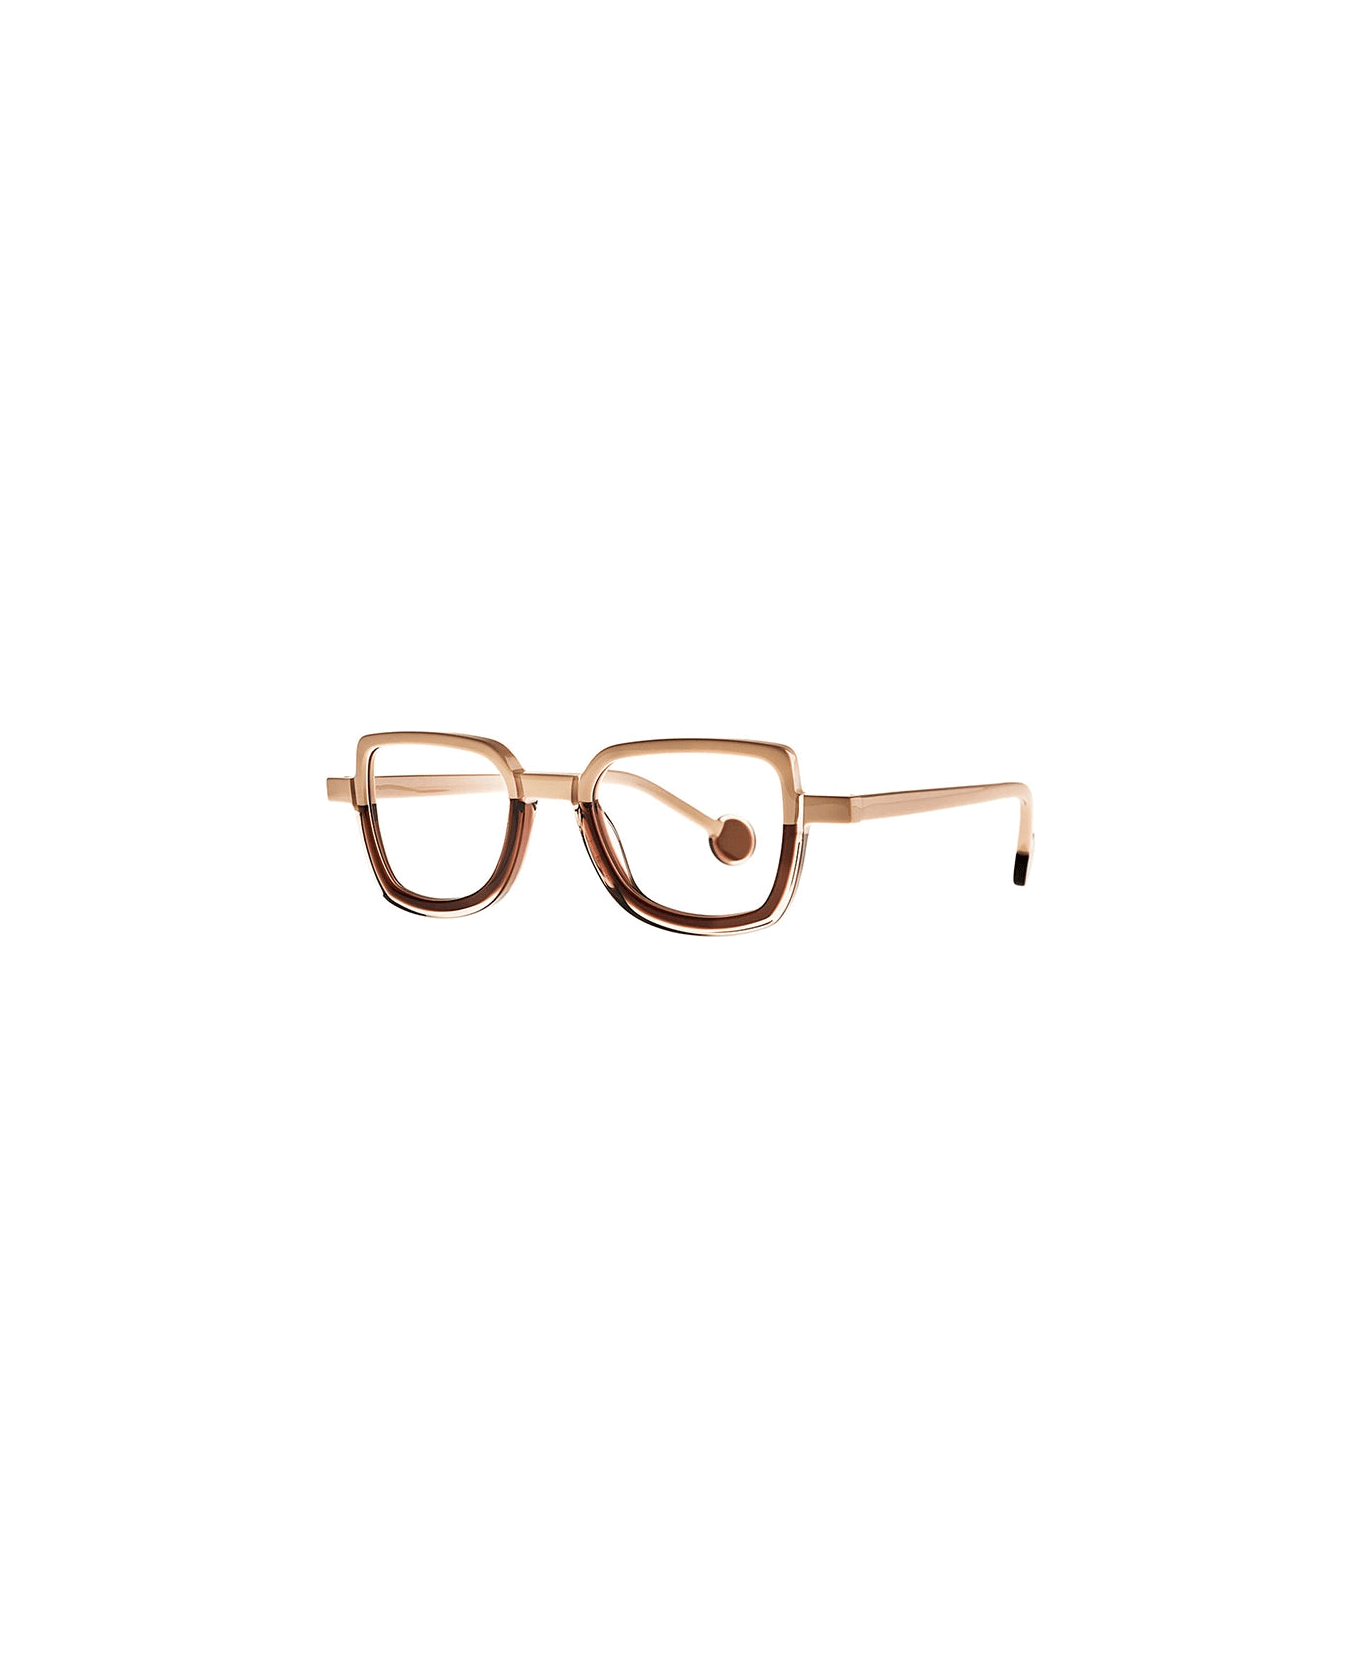 Theo Eyewear Schommel - 11 Glasses - ivory/brown アイウェア